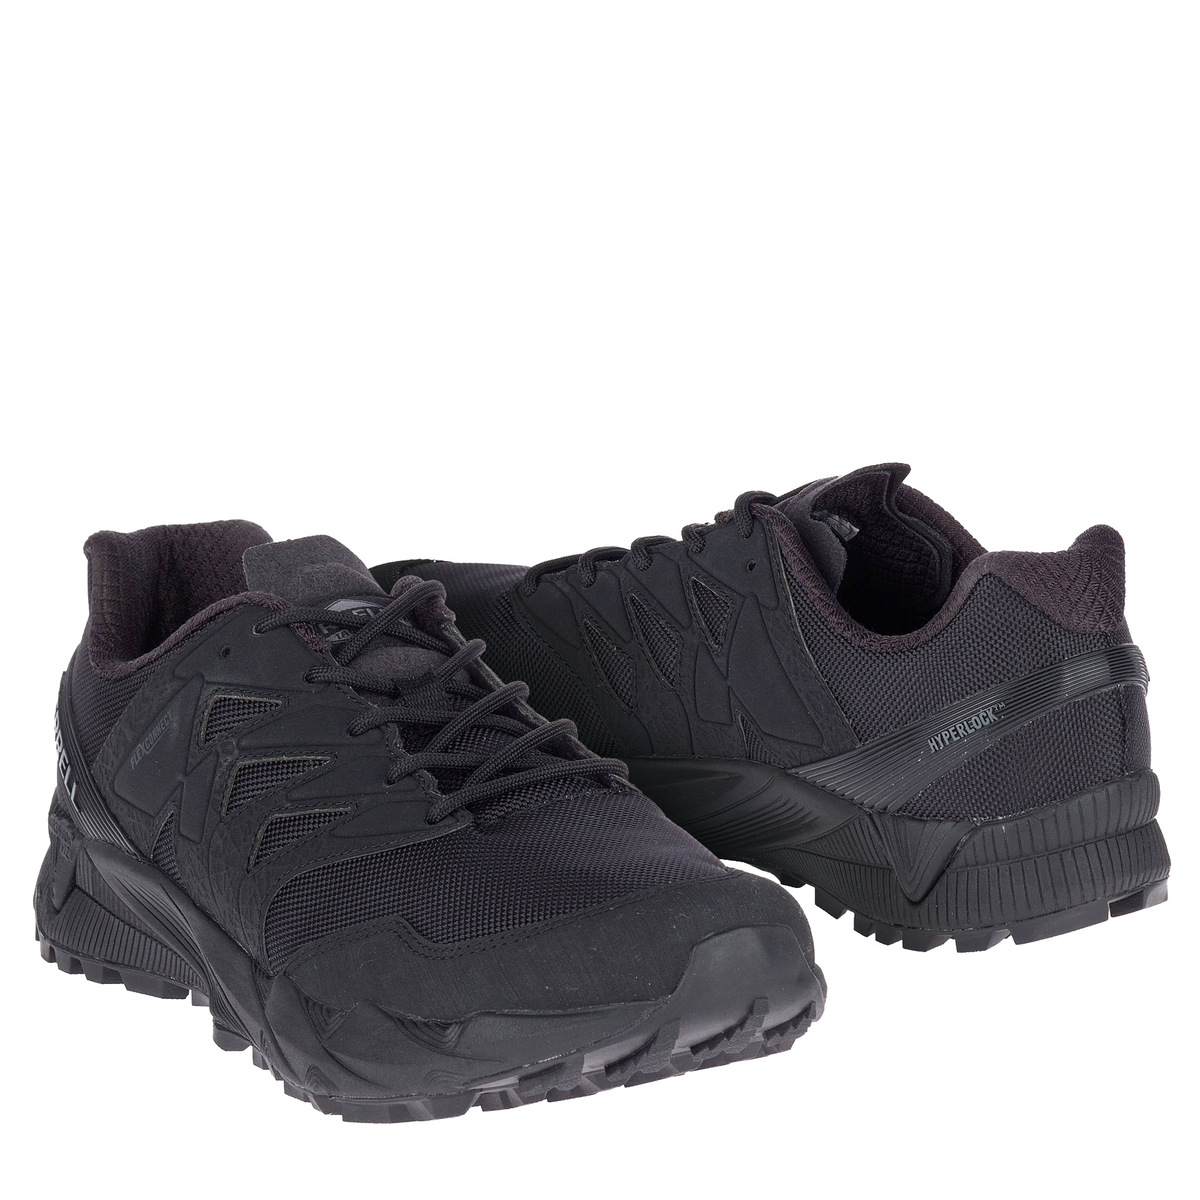 Merrell Agility Peak Tactical Shoe - Black